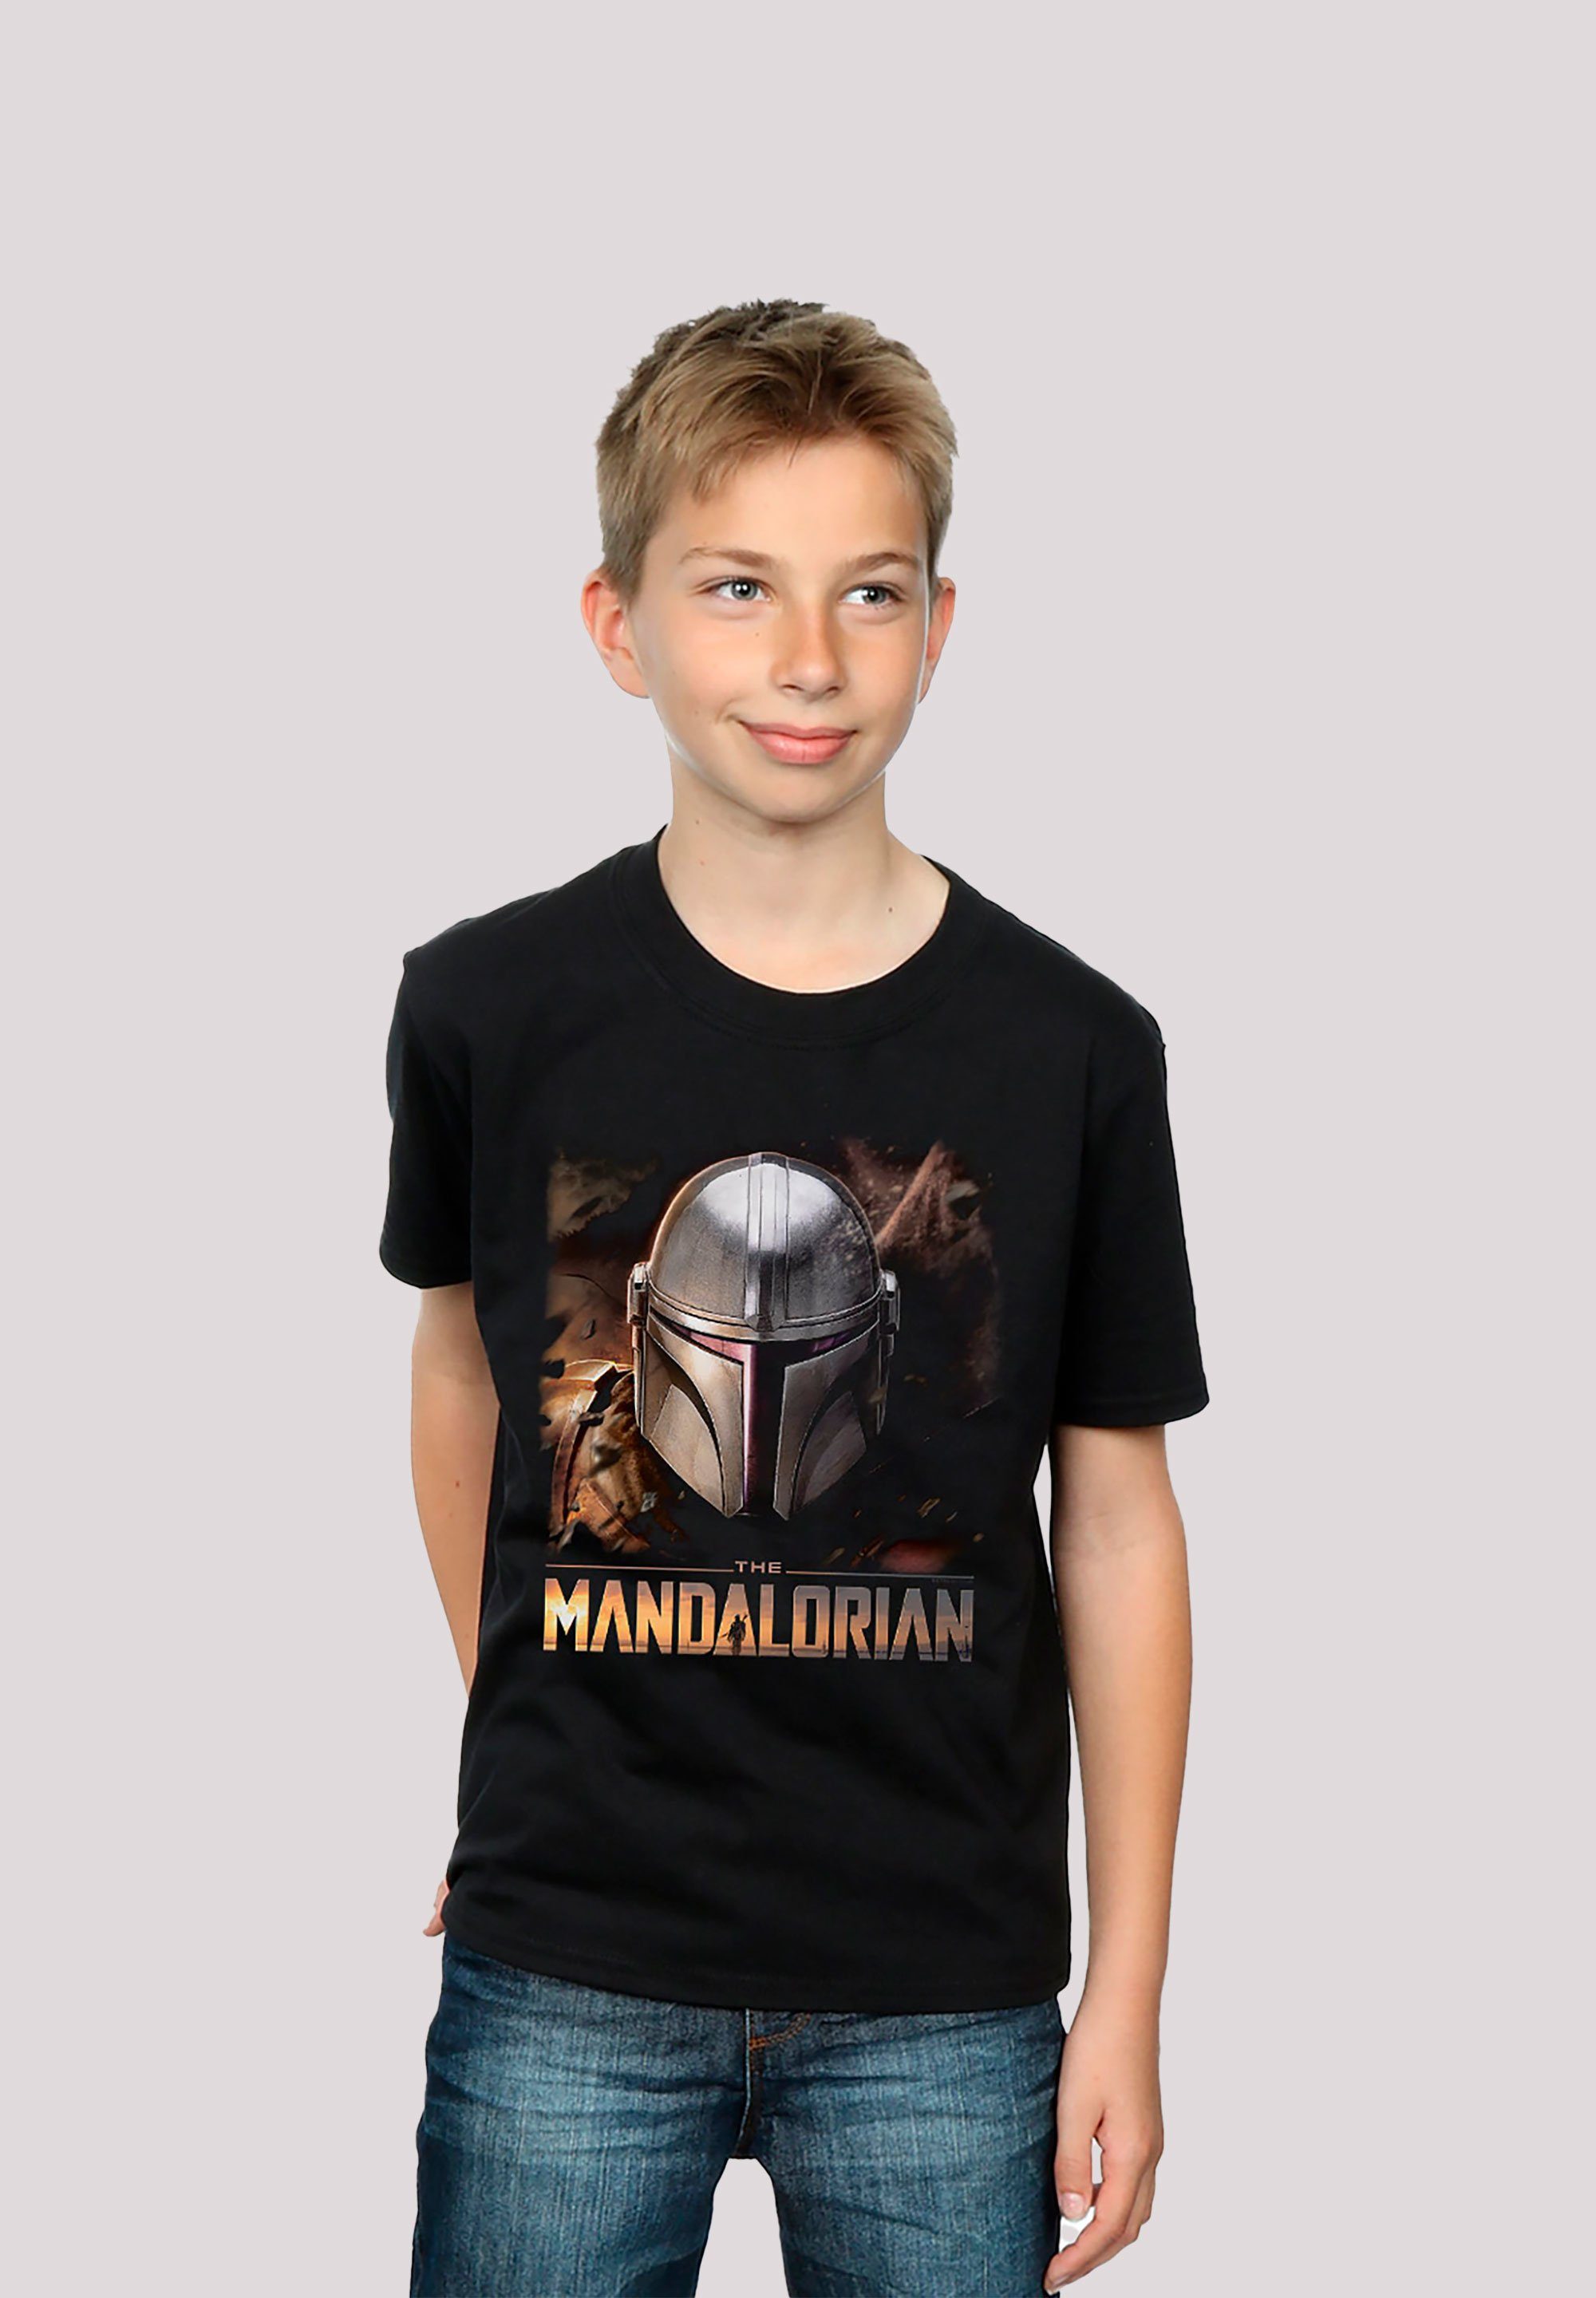 The Mandalorian F4NT4STIC der - T-Shirt Helm Sterne Premium Krieg Wars Print Star